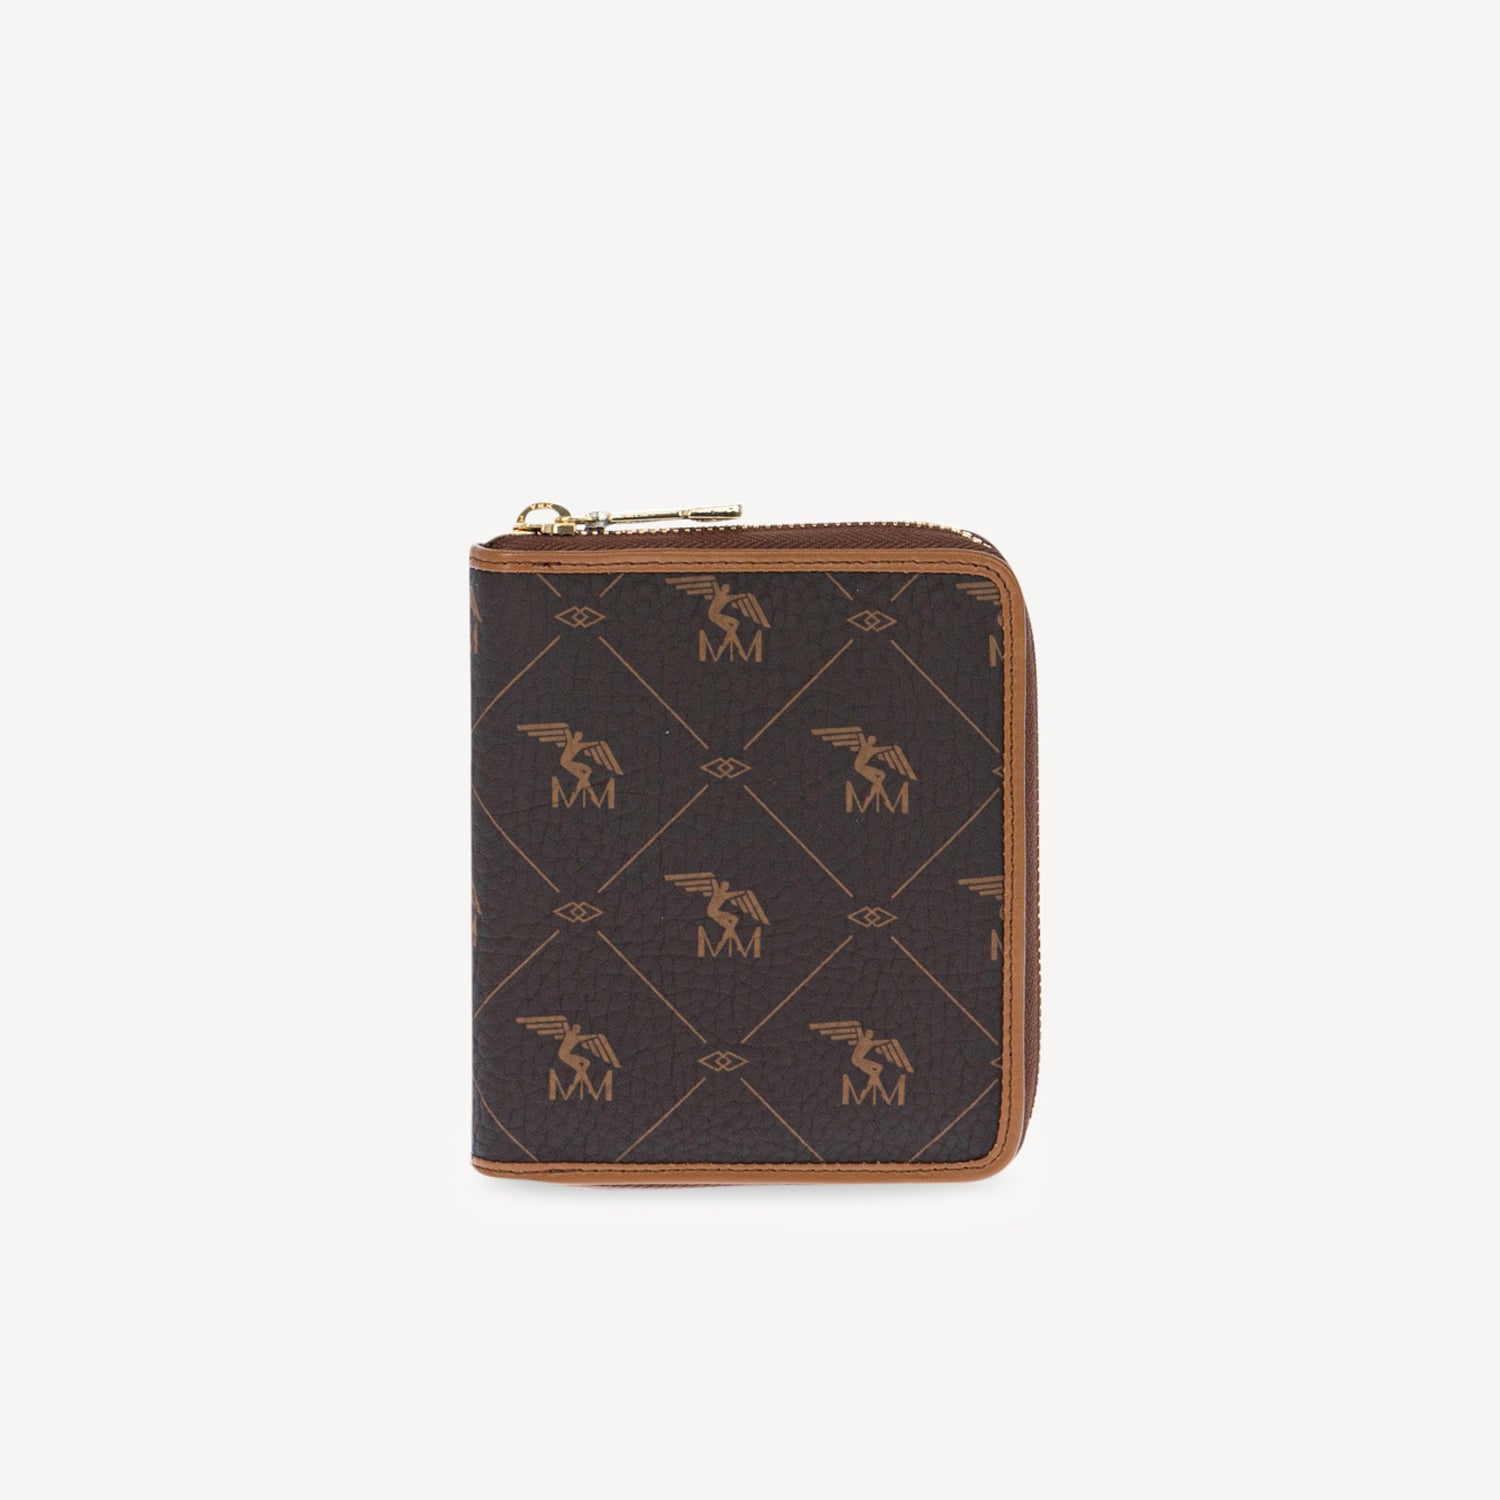 NIEDERHORN | Wallet Pecarus brown/gold